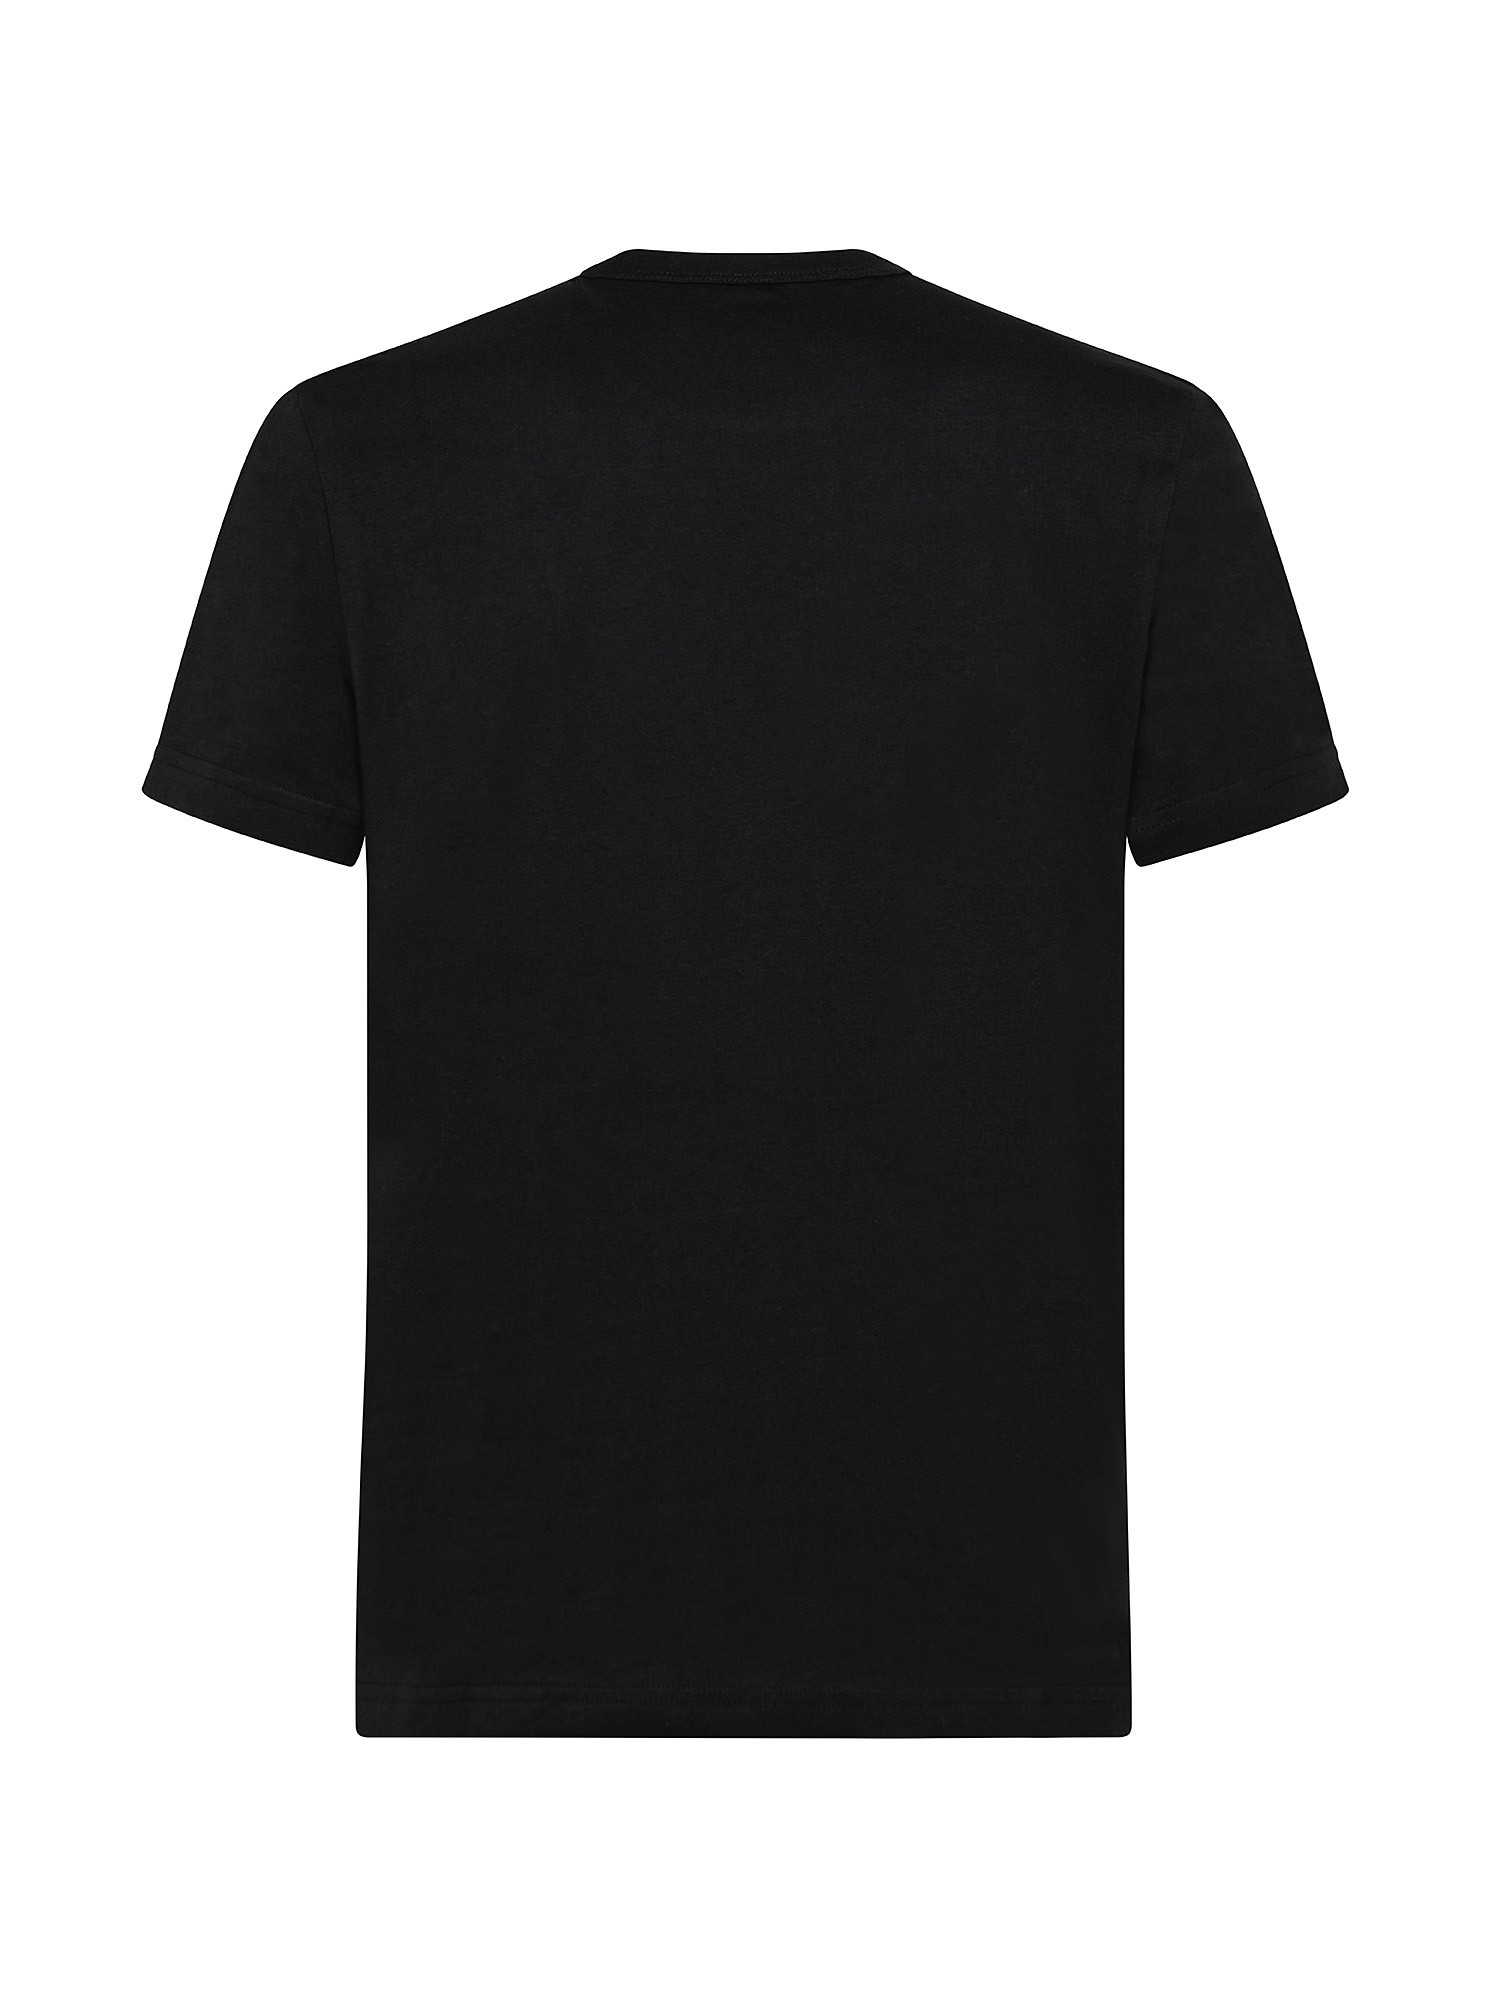 T-shirt manica corta, Nero, large image number 1